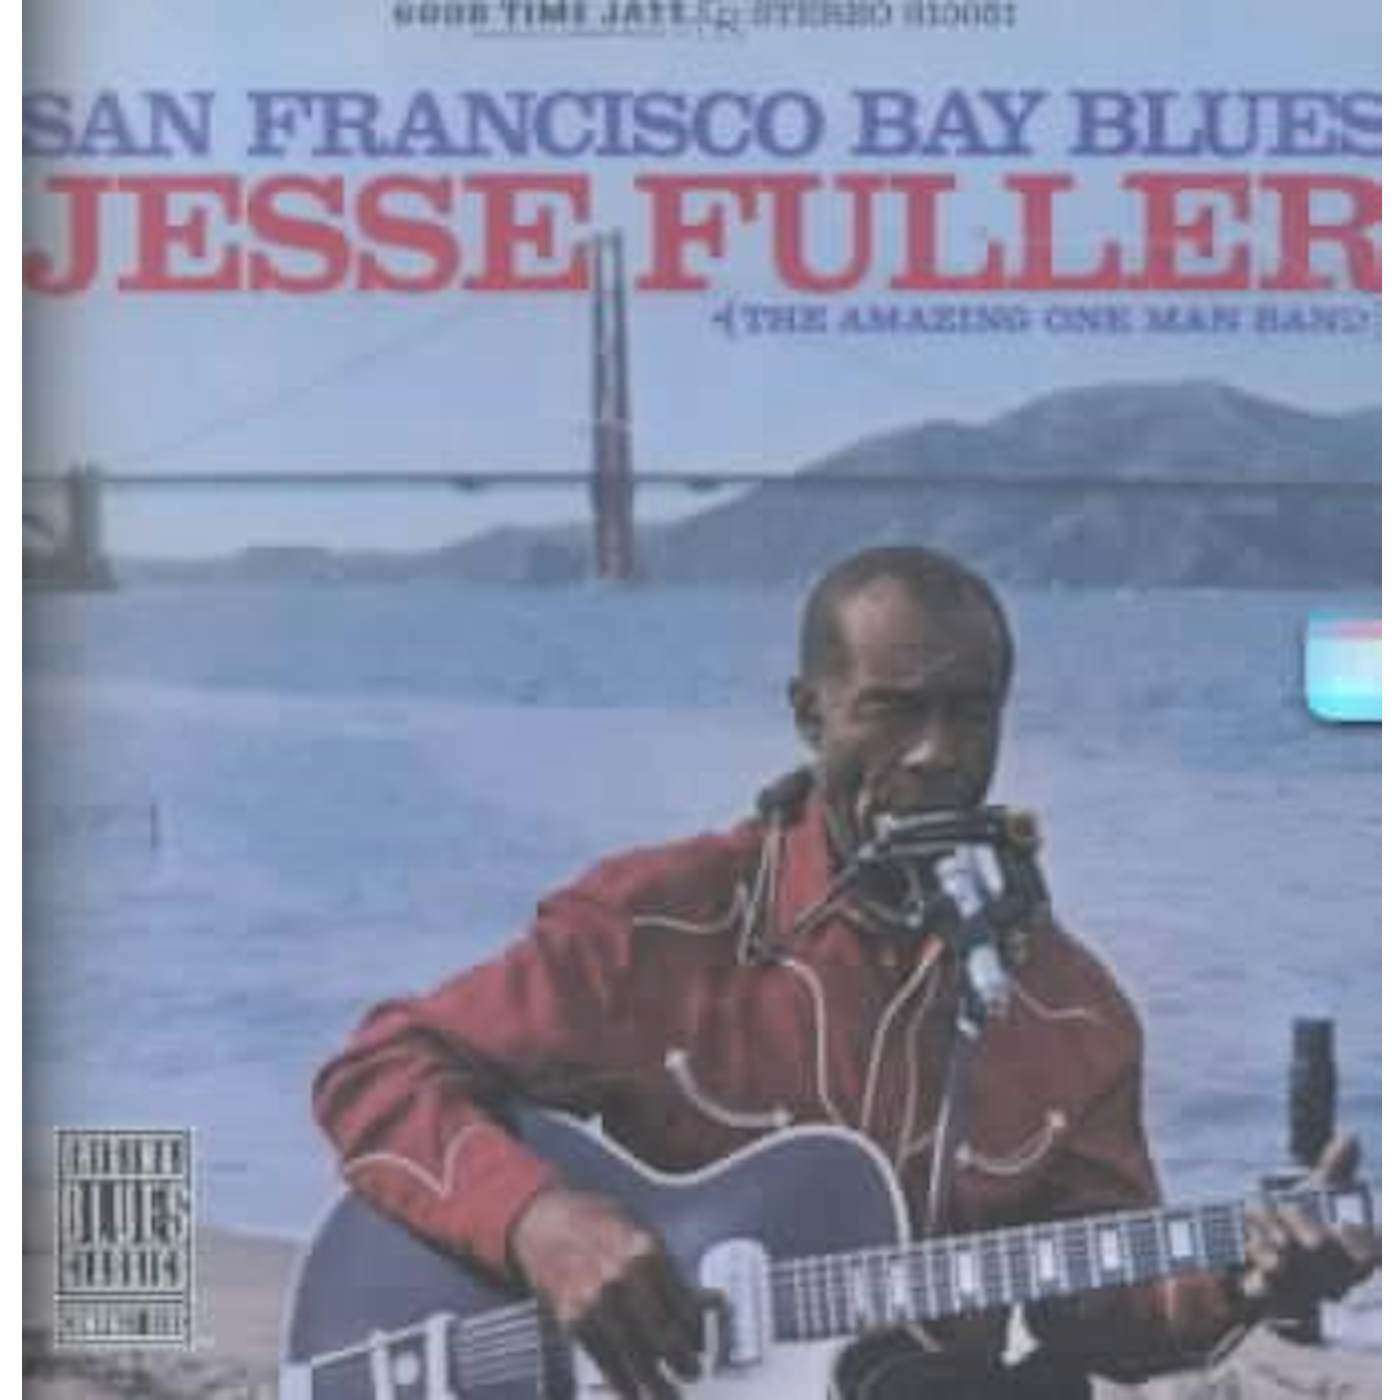 Jesse Fuller San Francisco Bay Blues CD